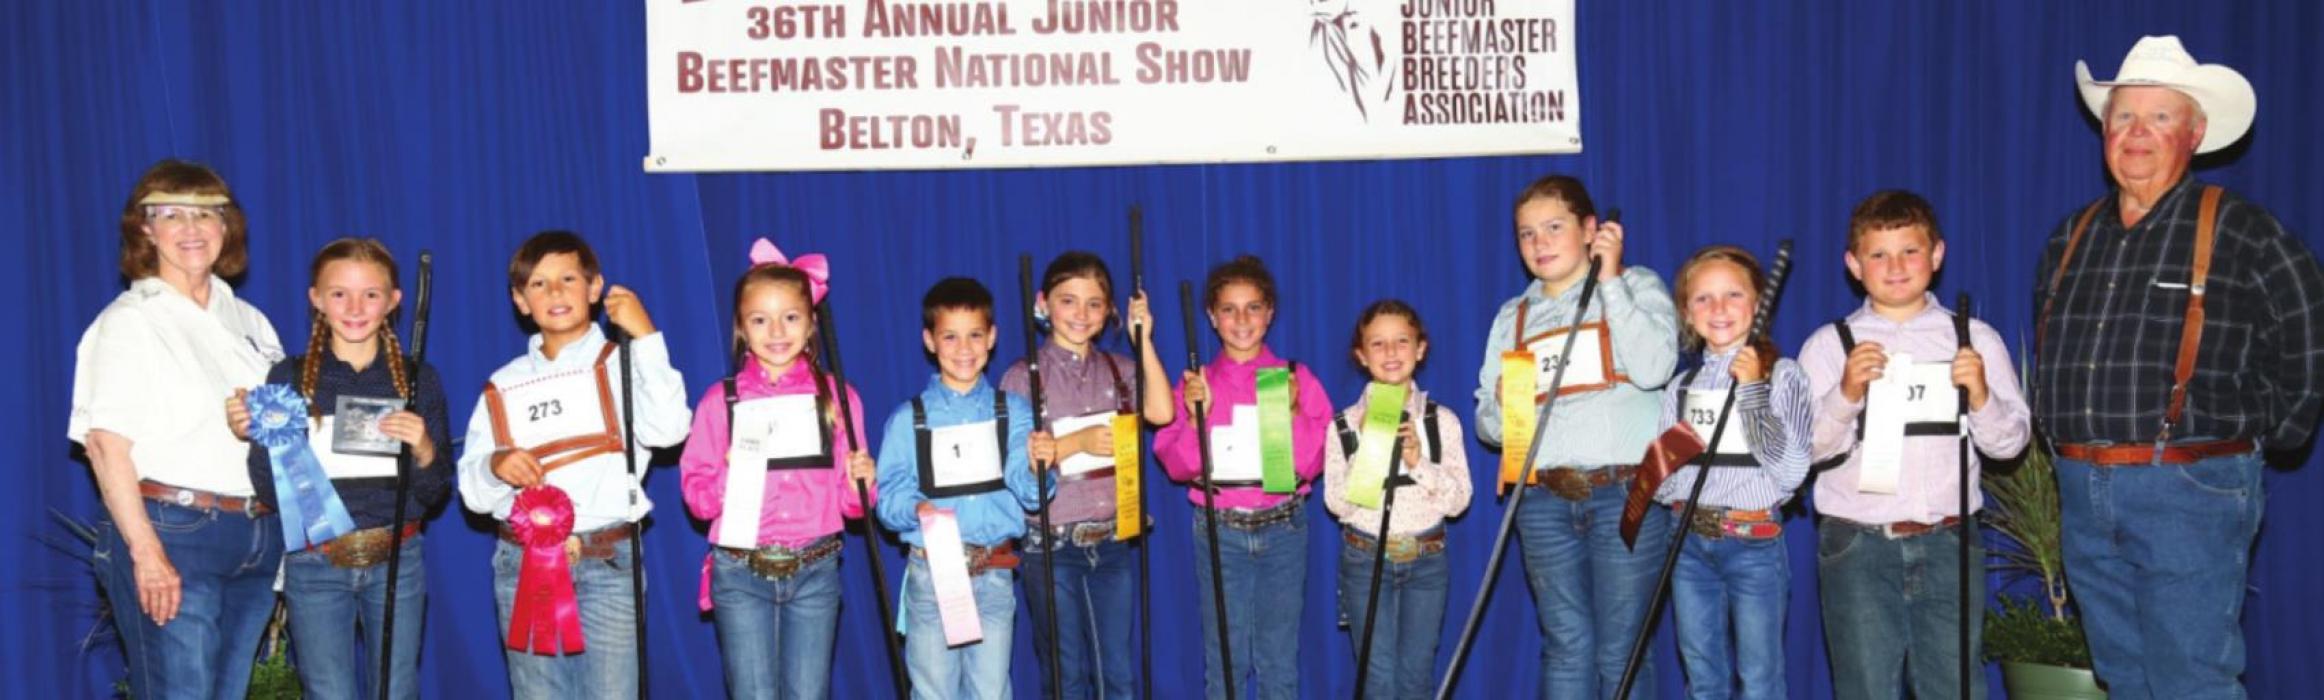 Top 10 Junior Showmanship winners with judge.